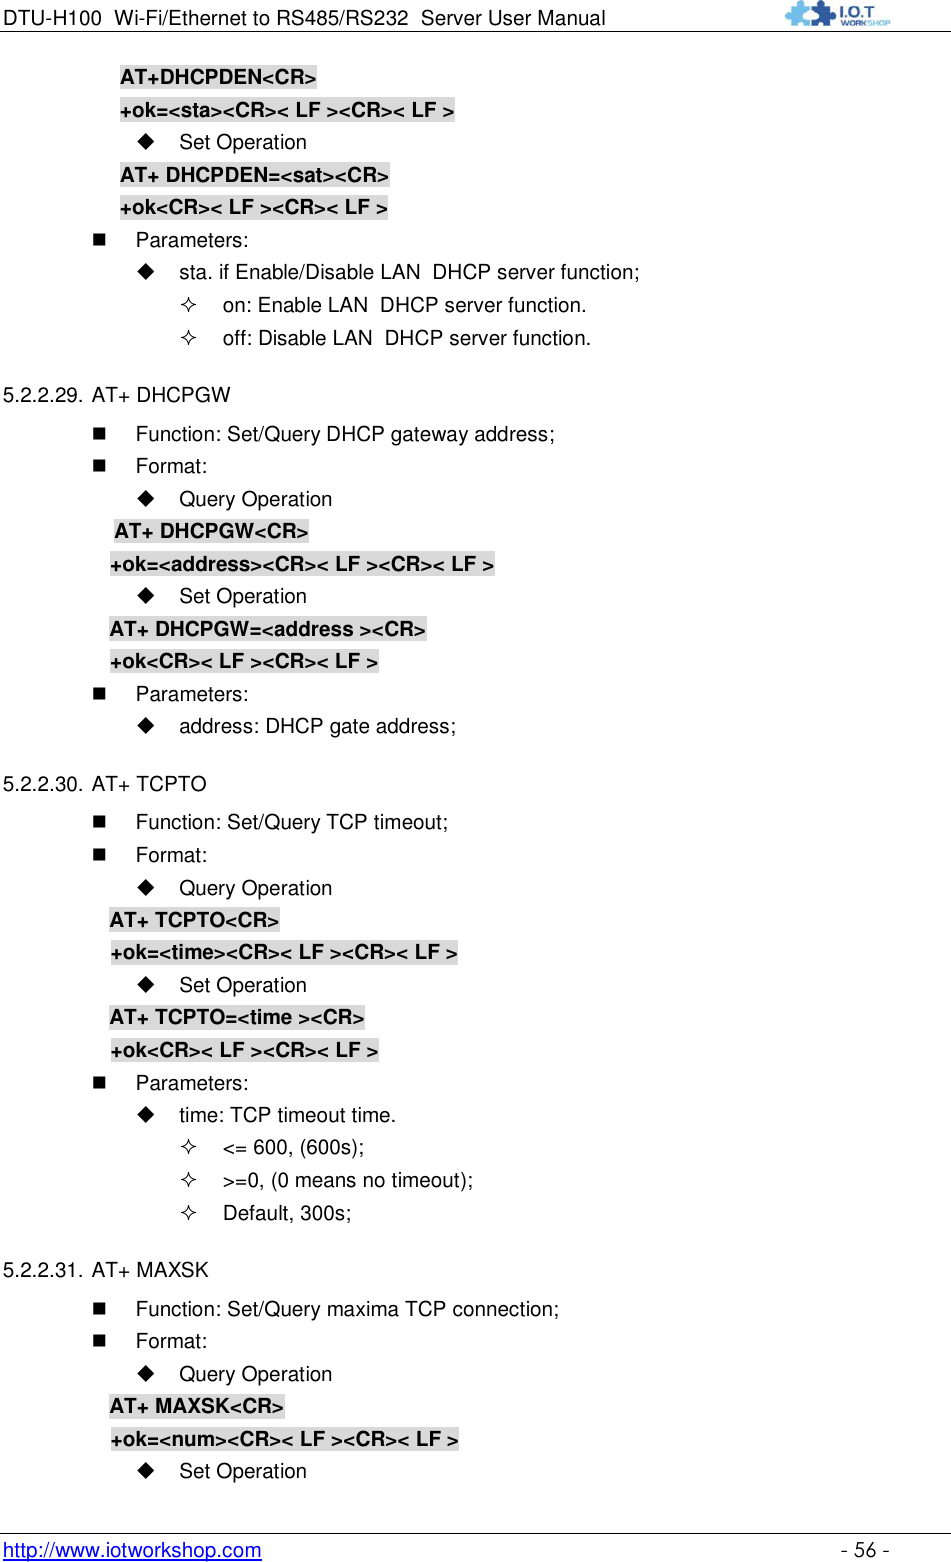 DTU-H100 Wi-Fi/Ethernet to RS485/RS232  Server User Manual    http://www.iotworkshop.com    - 56 - AT+DHCPDEN&lt;CR&gt; +ok=&lt;sta&gt;&lt;CR&gt;&lt; LF &gt;&lt;CR&gt;&lt; LF &gt;  Set Operation AT+ DHCPDEN=&lt;sat&gt;&lt;CR&gt; +ok&lt;CR&gt;&lt; LF &gt;&lt;CR&gt;&lt; LF &gt;  Parameters:  sta. if Enable/Disable LAN  DHCP server function;  on: Enable LAN  DHCP server function.  off: Disable LAN  DHCP server function.  5.2.2.29. AT+ DHCPGW  Function: Set/Query DHCP gateway address;  Format:  Query Operation            AT+ DHCPGW&lt;CR&gt;      +ok=&lt;address&gt;&lt;CR&gt;&lt; LF &gt;&lt;CR&gt;&lt; LF &gt;  Set Operation AT+ DHCPGW=&lt;address &gt;&lt;CR&gt;      +ok&lt;CR&gt;&lt; LF &gt;&lt;CR&gt;&lt; LF &gt;  Parameters:  address: DHCP gate address; 5.2.2.30. AT+ TCPTO  Function: Set/Query TCP timeout;  Format:  Query Operation AT+ TCPTO&lt;CR&gt; +ok=&lt;time&gt;&lt;CR&gt;&lt; LF &gt;&lt;CR&gt;&lt; LF &gt;  Set Operation AT+ TCPTO=&lt;time &gt;&lt;CR&gt; +ok&lt;CR&gt;&lt; LF &gt;&lt;CR&gt;&lt; LF &gt;  Parameters:  time: TCP timeout time.  &lt;= 600, (600s);  &gt;=0, (0 means no timeout);  Default, 300s; 5.2.2.31. AT+ MAXSK  Function: Set/Query maxima TCP connection;  Format:  Query Operation AT+ MAXSK&lt;CR&gt; +ok=&lt;num&gt;&lt;CR&gt;&lt; LF &gt;&lt;CR&gt;&lt; LF &gt;  Set Operation 